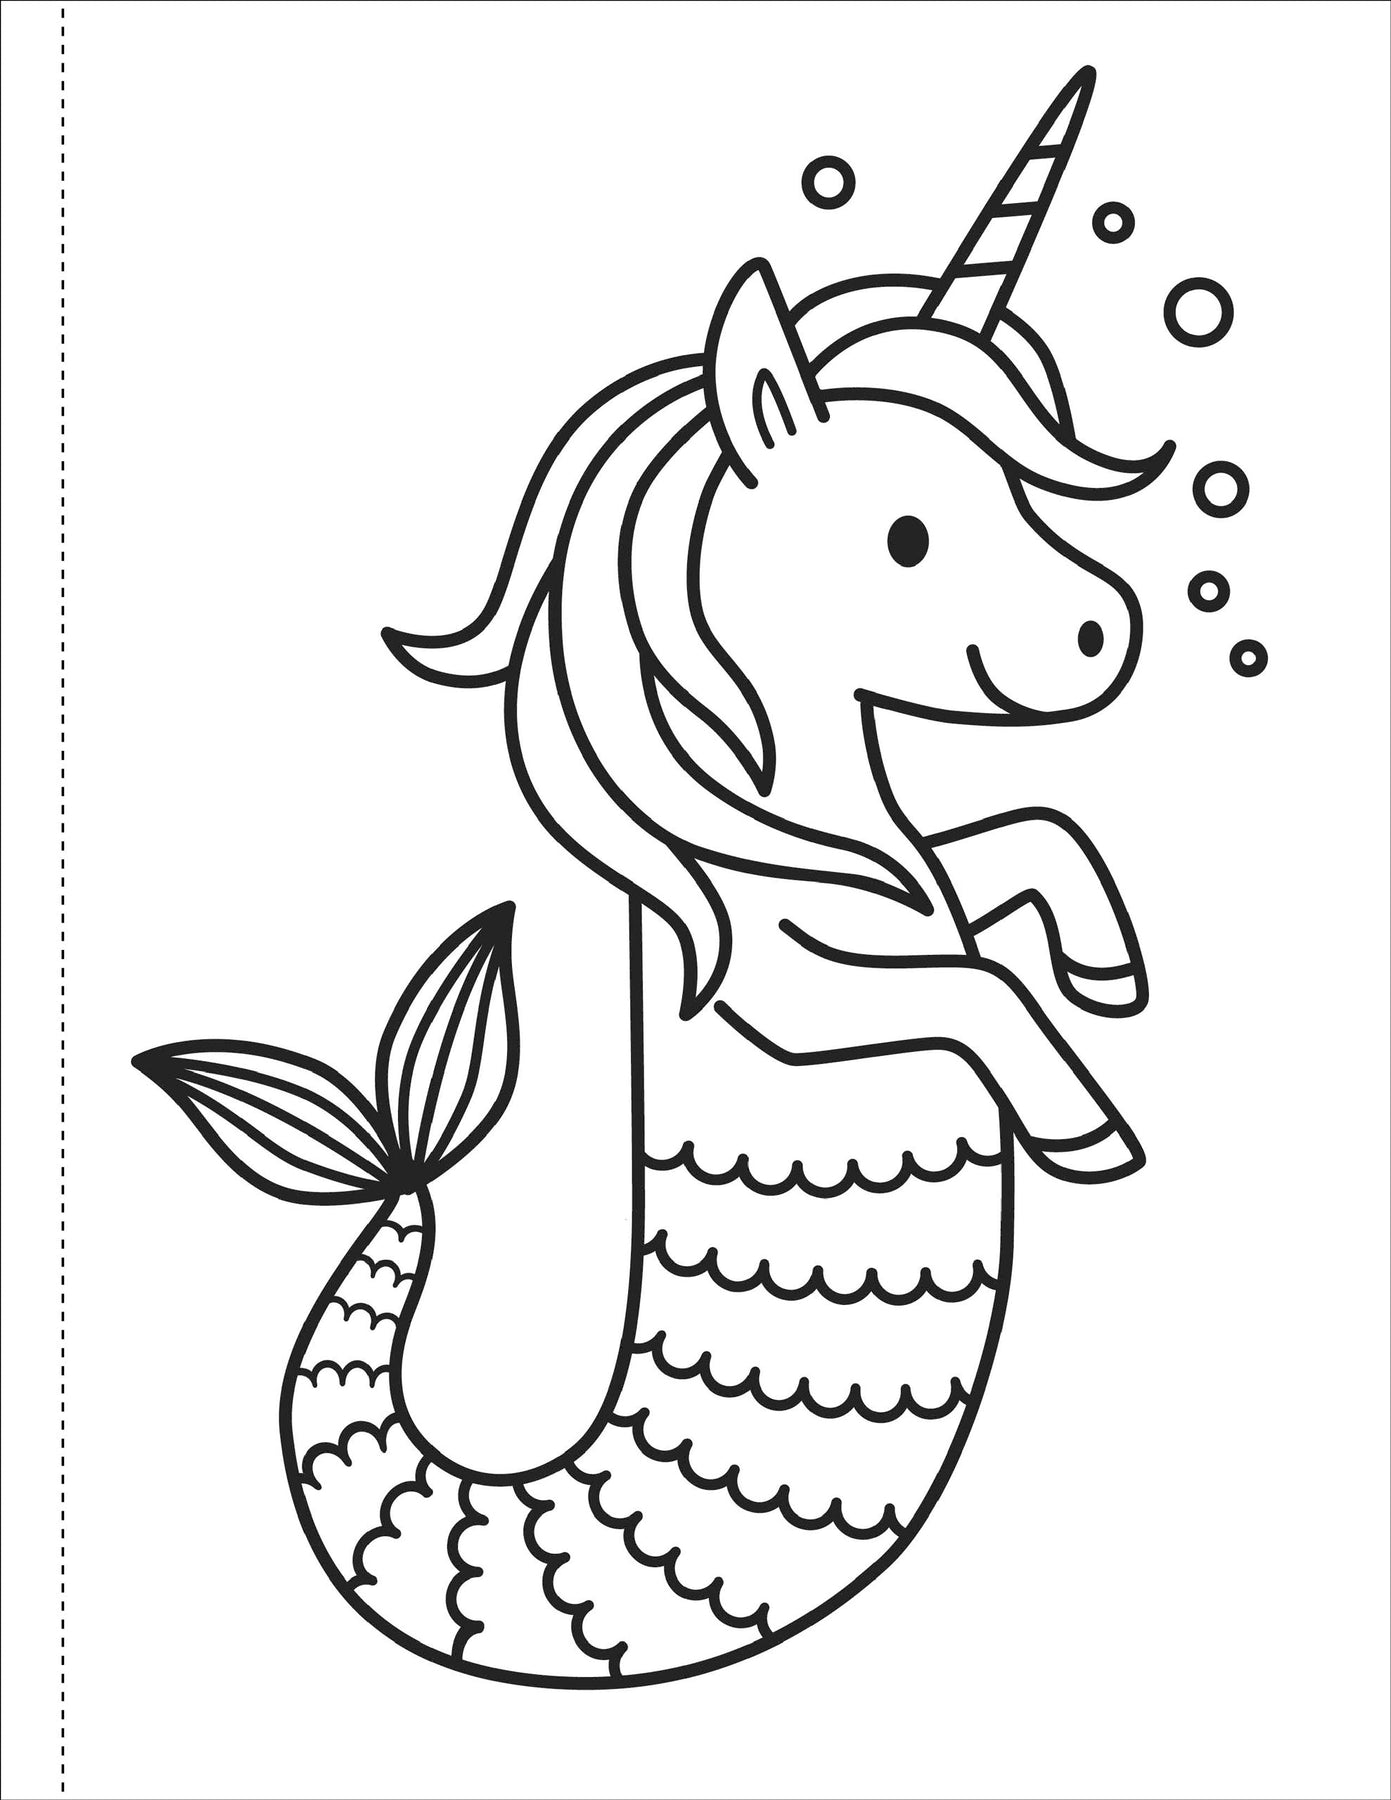 Kalysky 20Pack Small Coloring Books for Kids (5.1 x 7 inch), Bulk Coloring  Books Includes Unicorn, Mermaid, Farm, Dinosaur